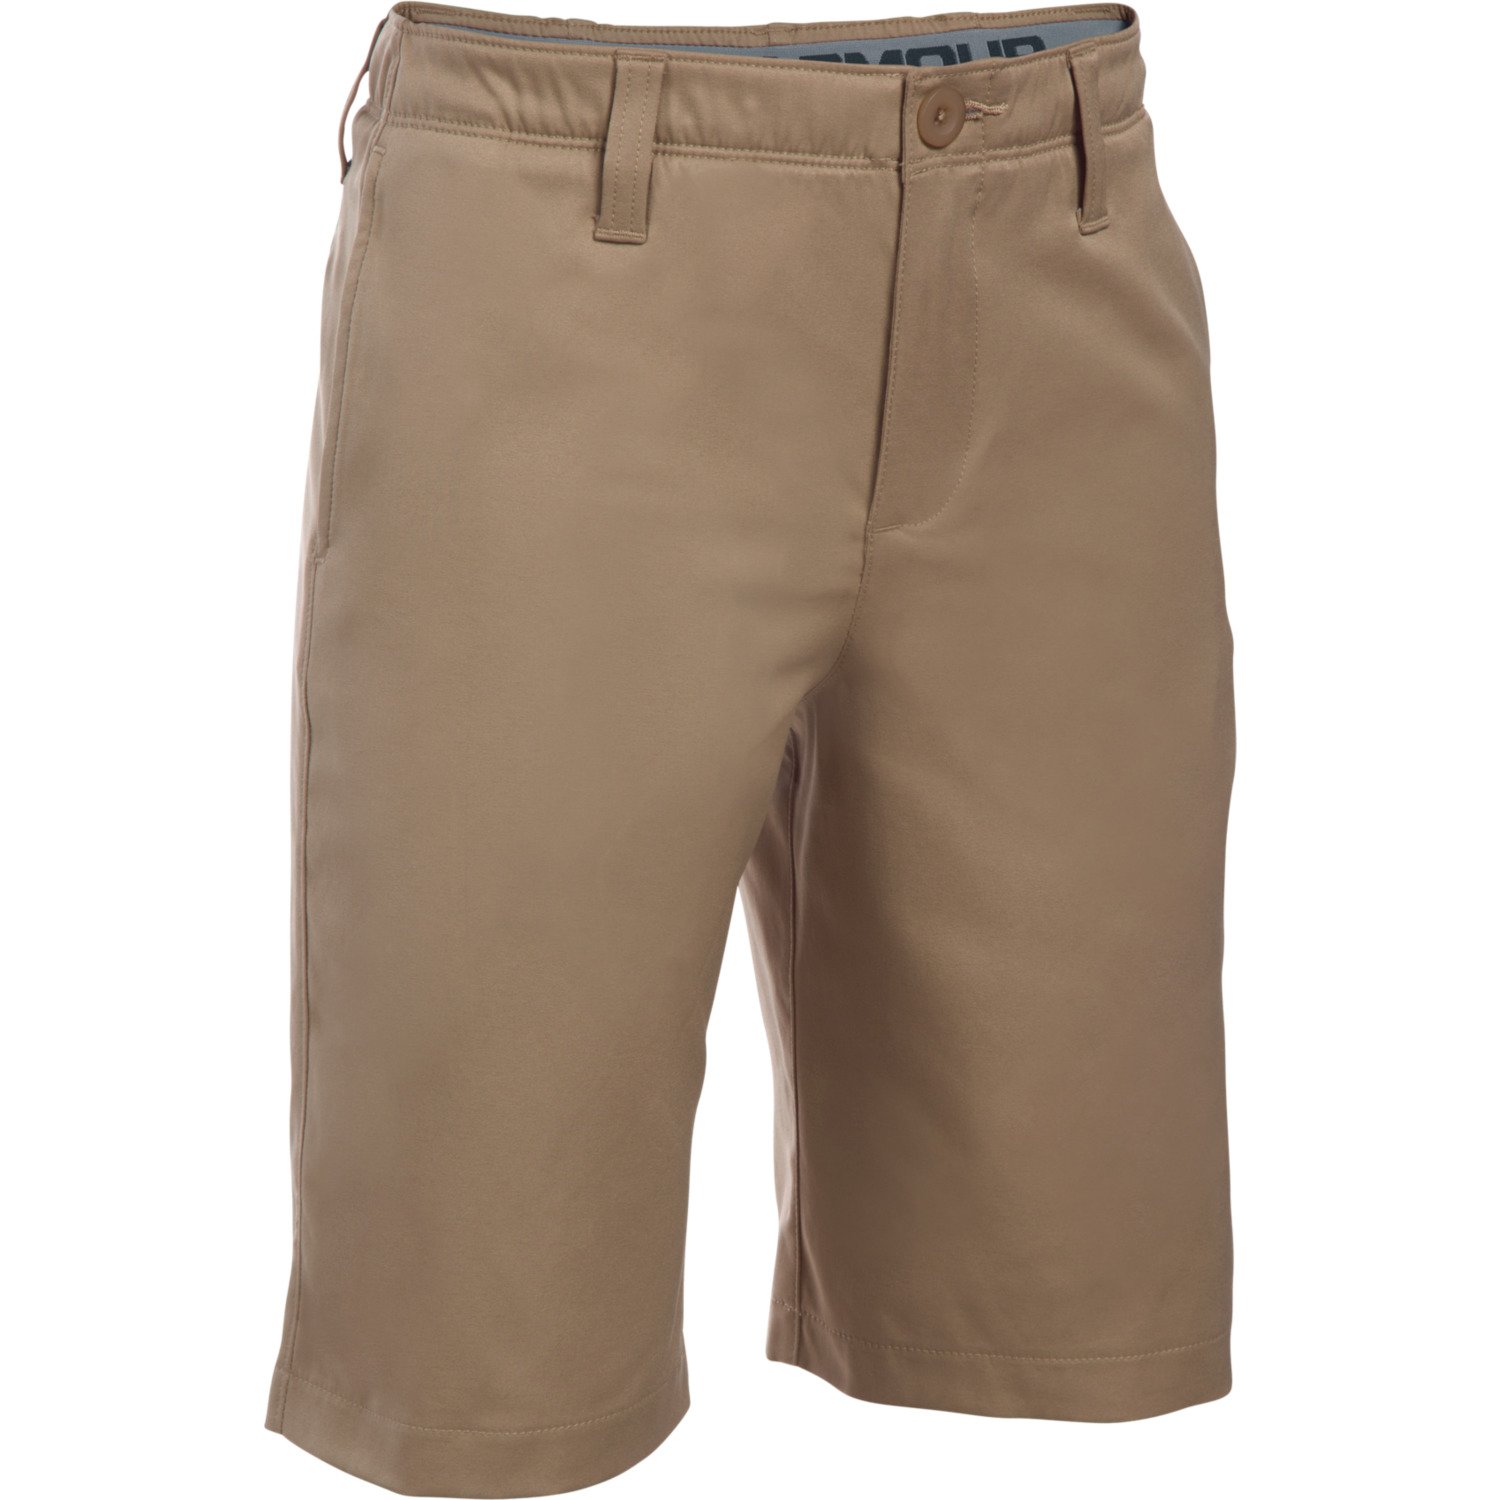 Golf Shorts | Golf Shorts, Men's Golf Shorts, Boys' Golf Shorts ...